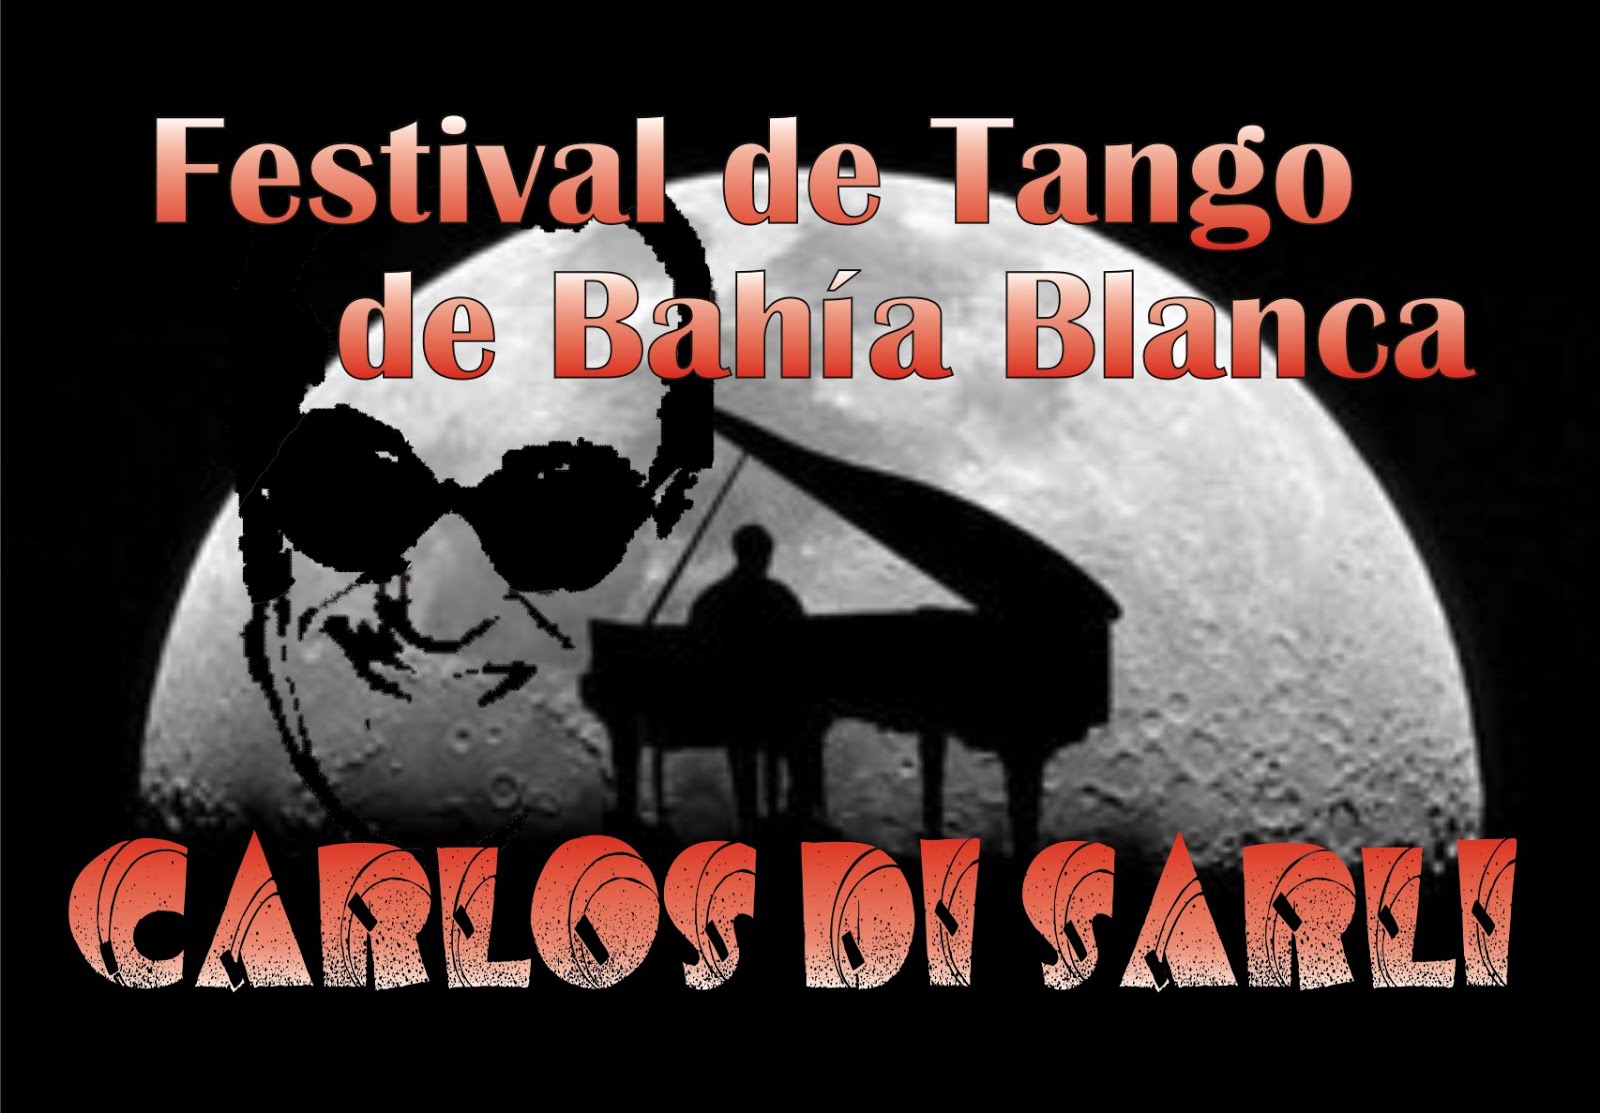 FESTIVAL DE TANGO DE BAHIA BLANCA "CARLOS DI SARLI"